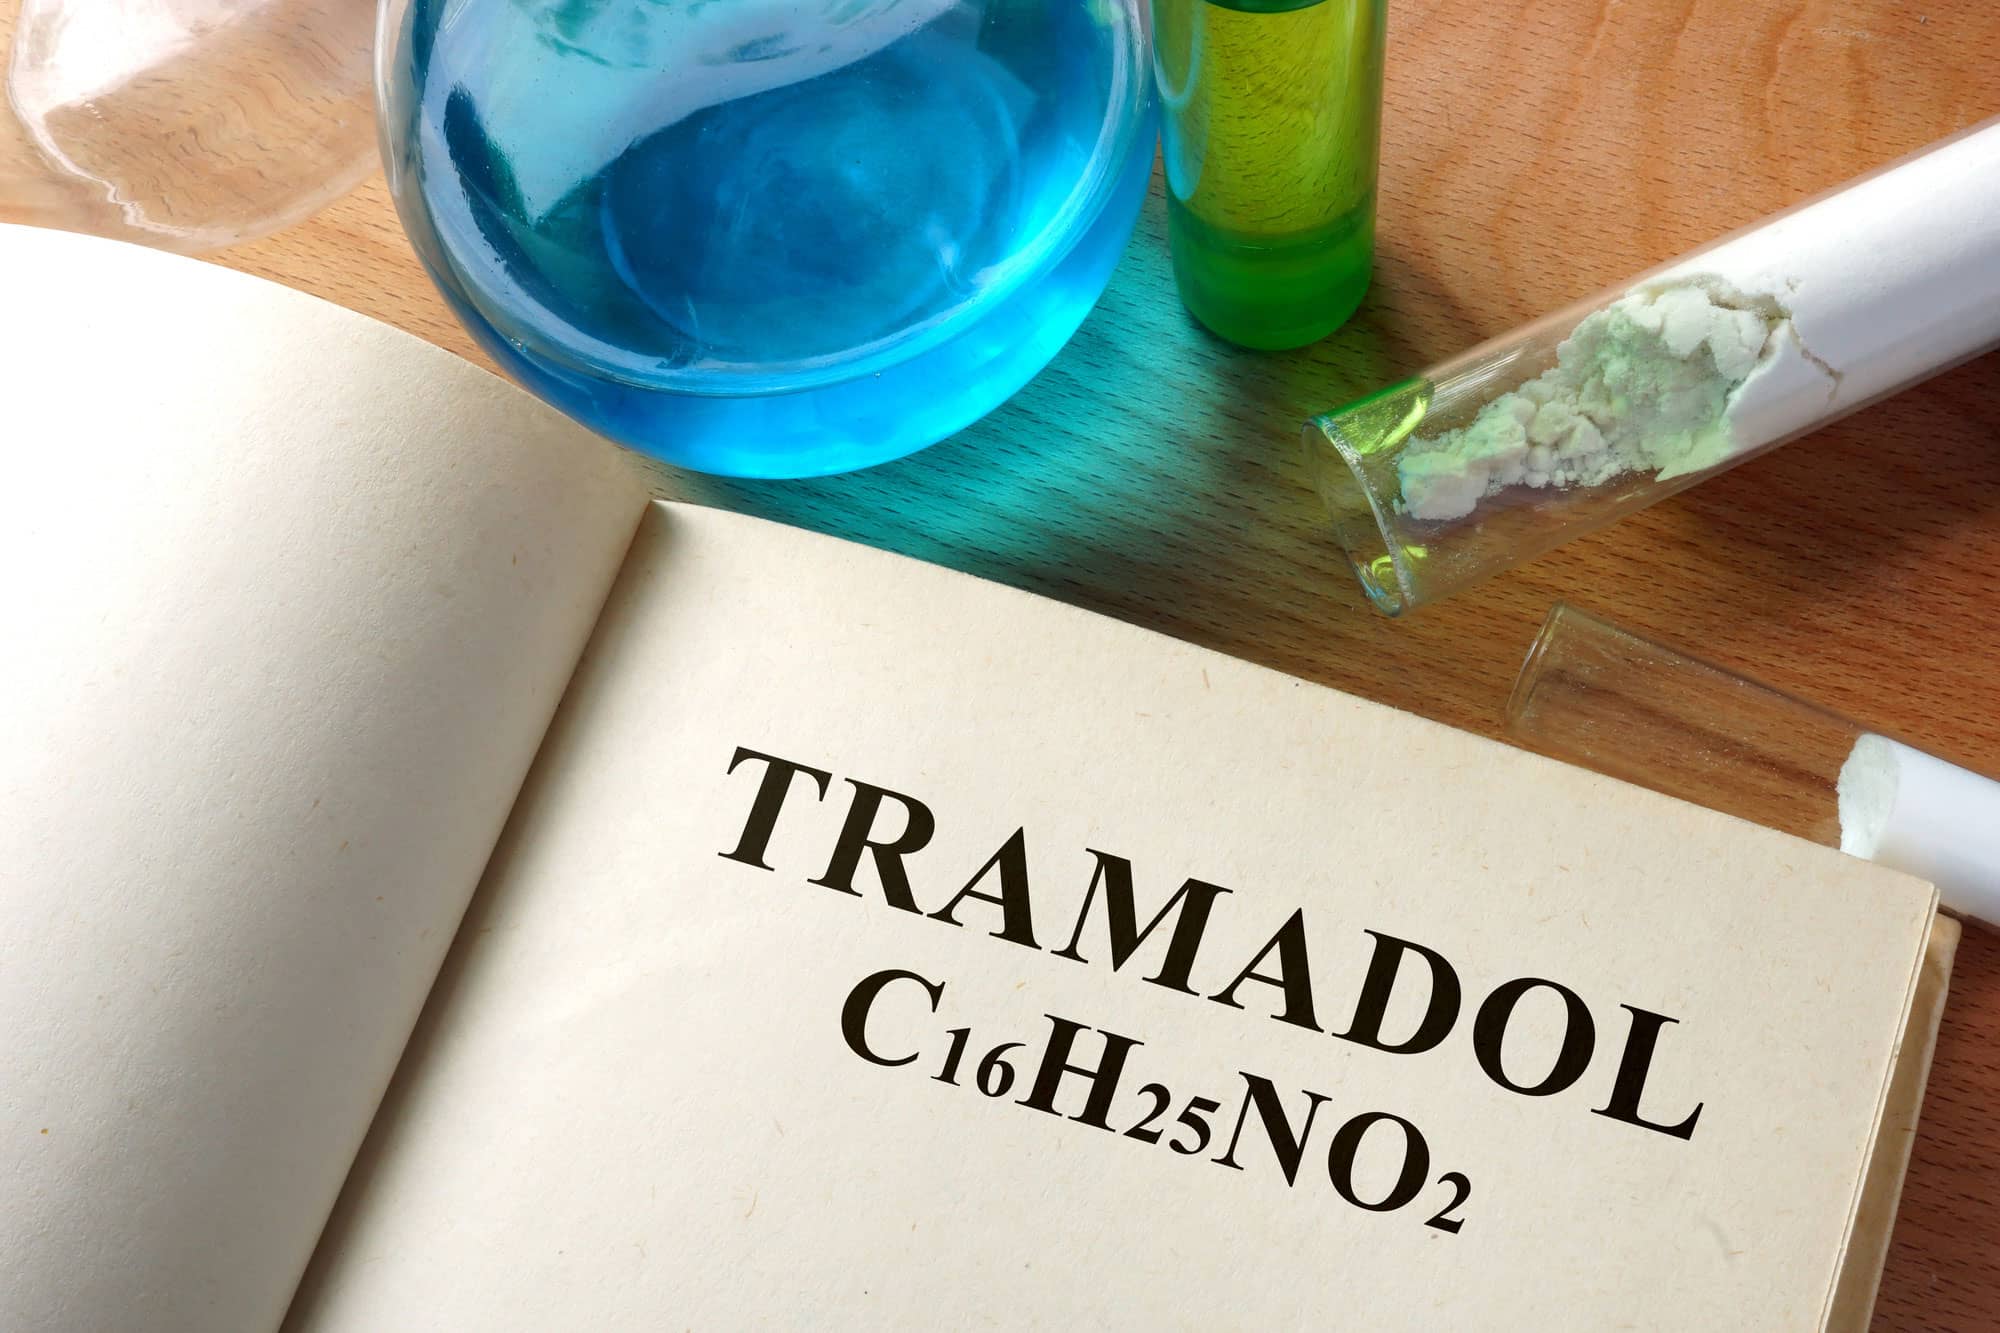 TRAMADOL ADDICTION TREATMENT AT HOME